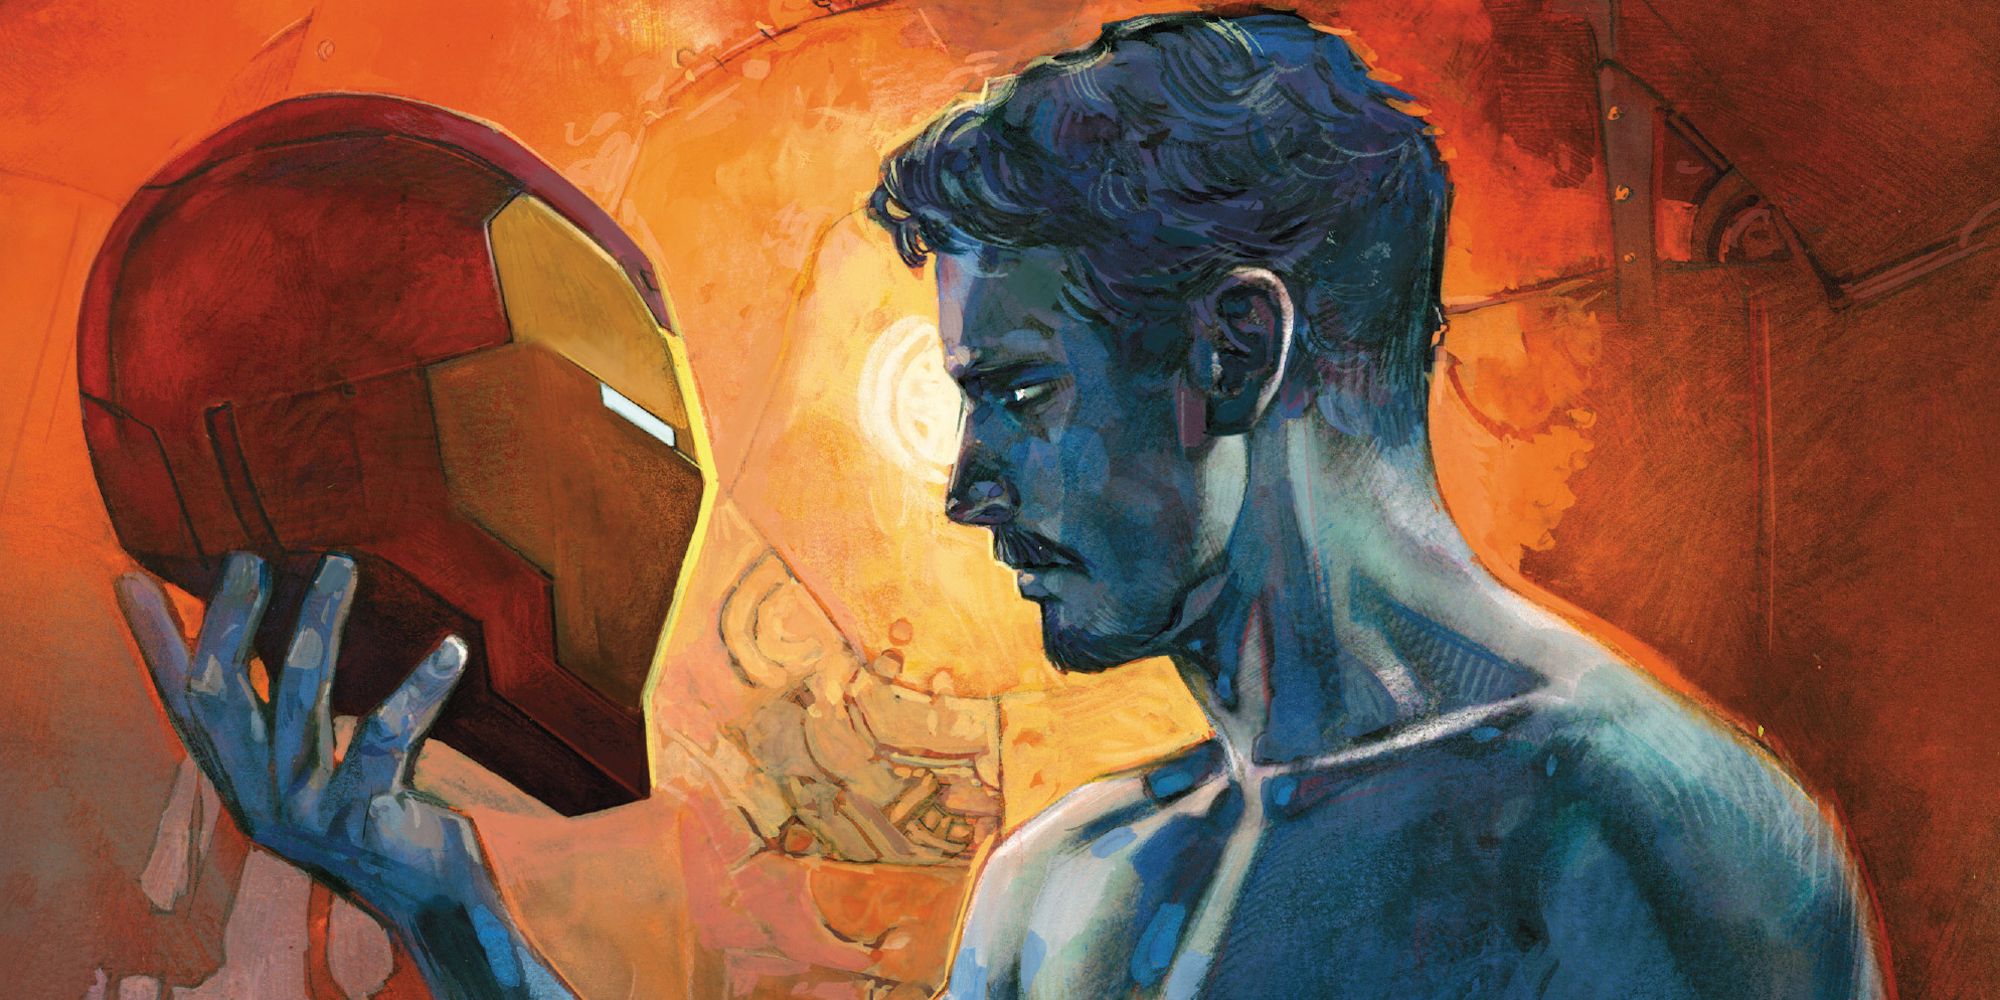 Tony Stark holding the Iron Man helmet in Marvel Comics